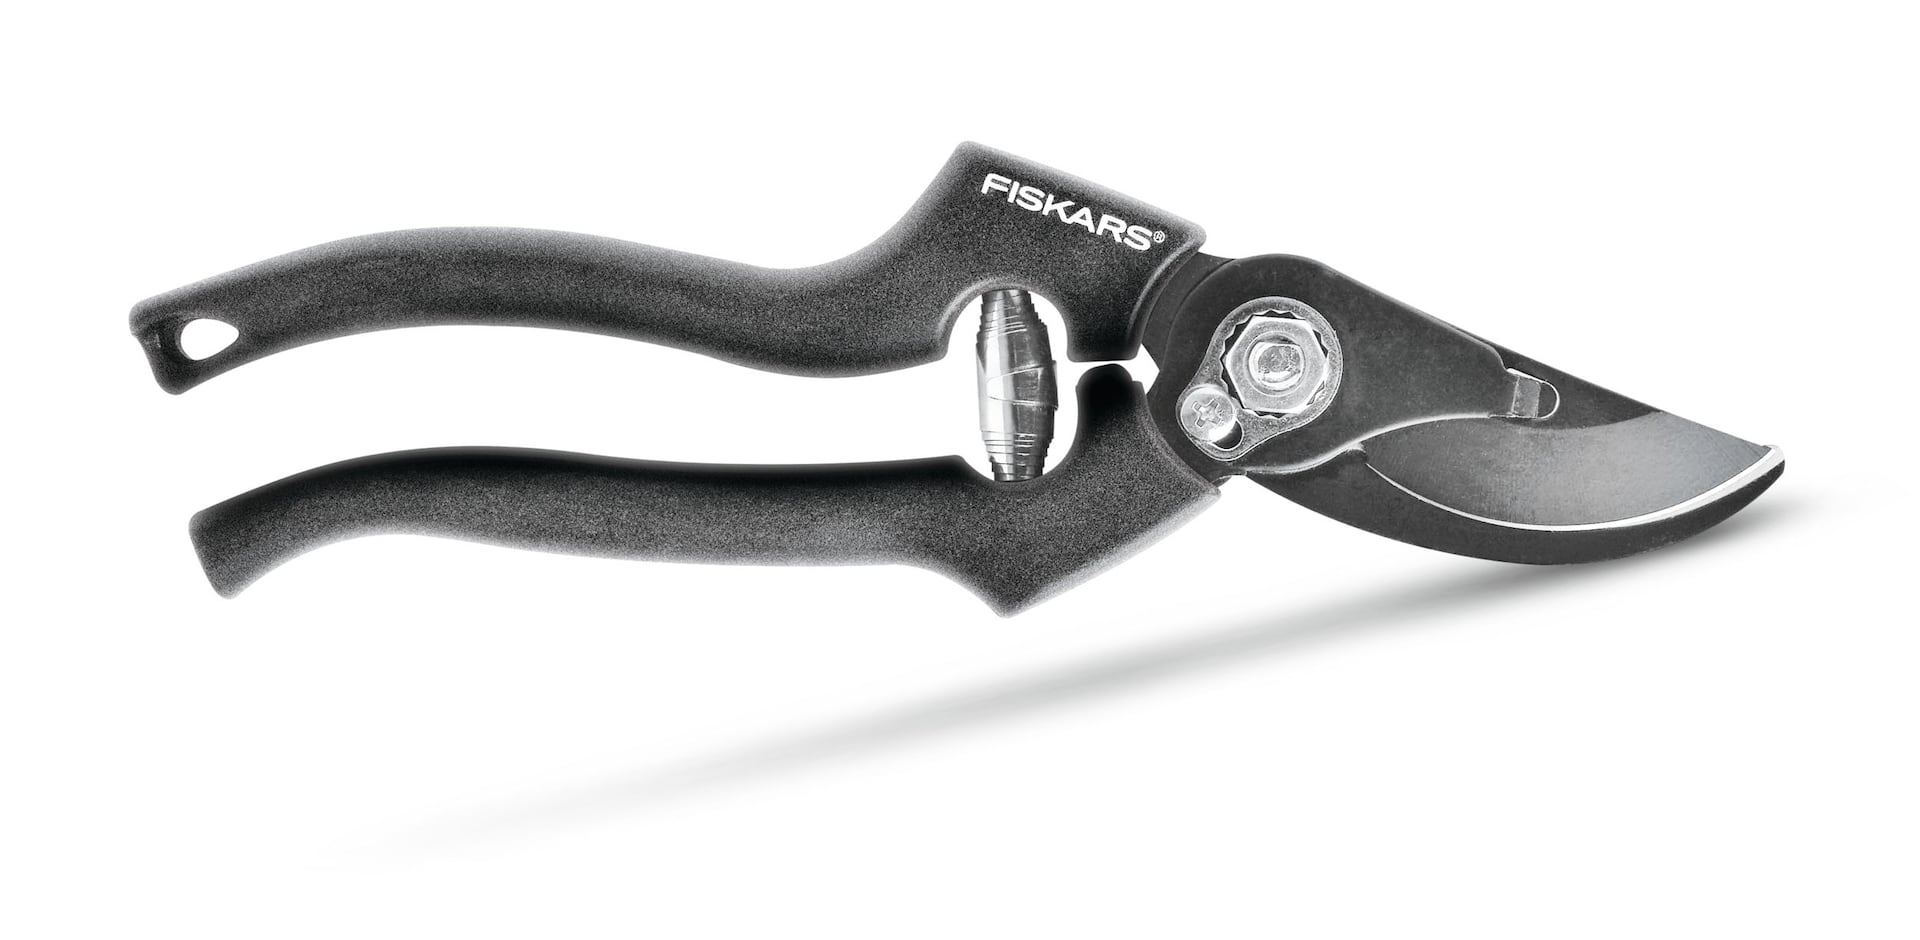 Fiskars 3/4 in. Cut Capacity Steel Blade with SoftGrip Handle